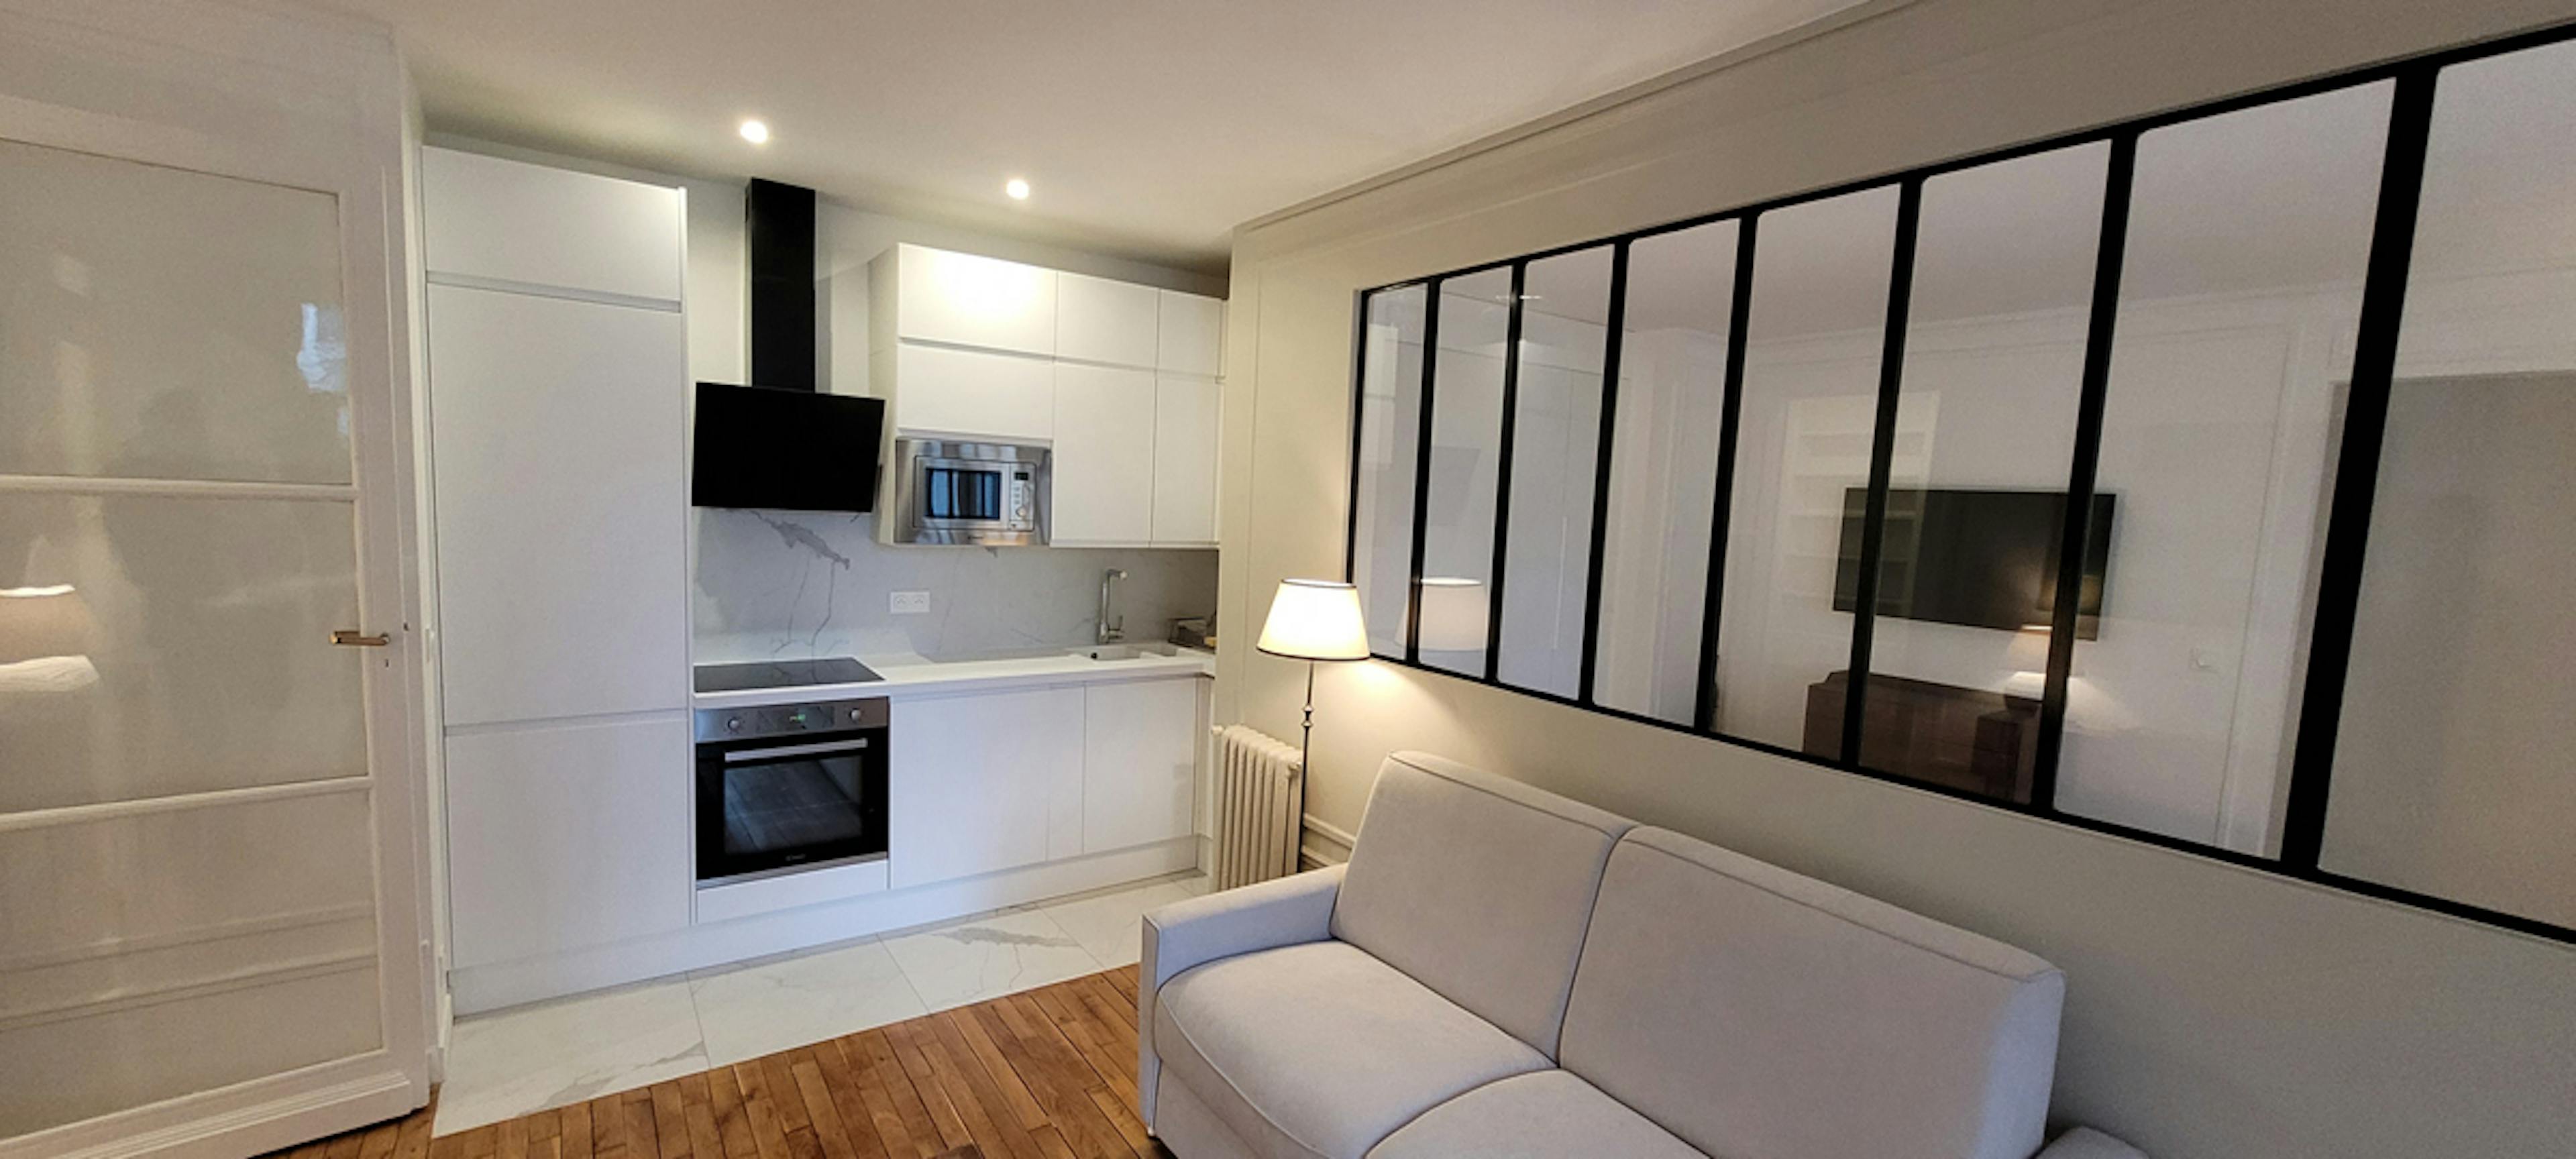 cuisine appartement 49 m2 Paris 16